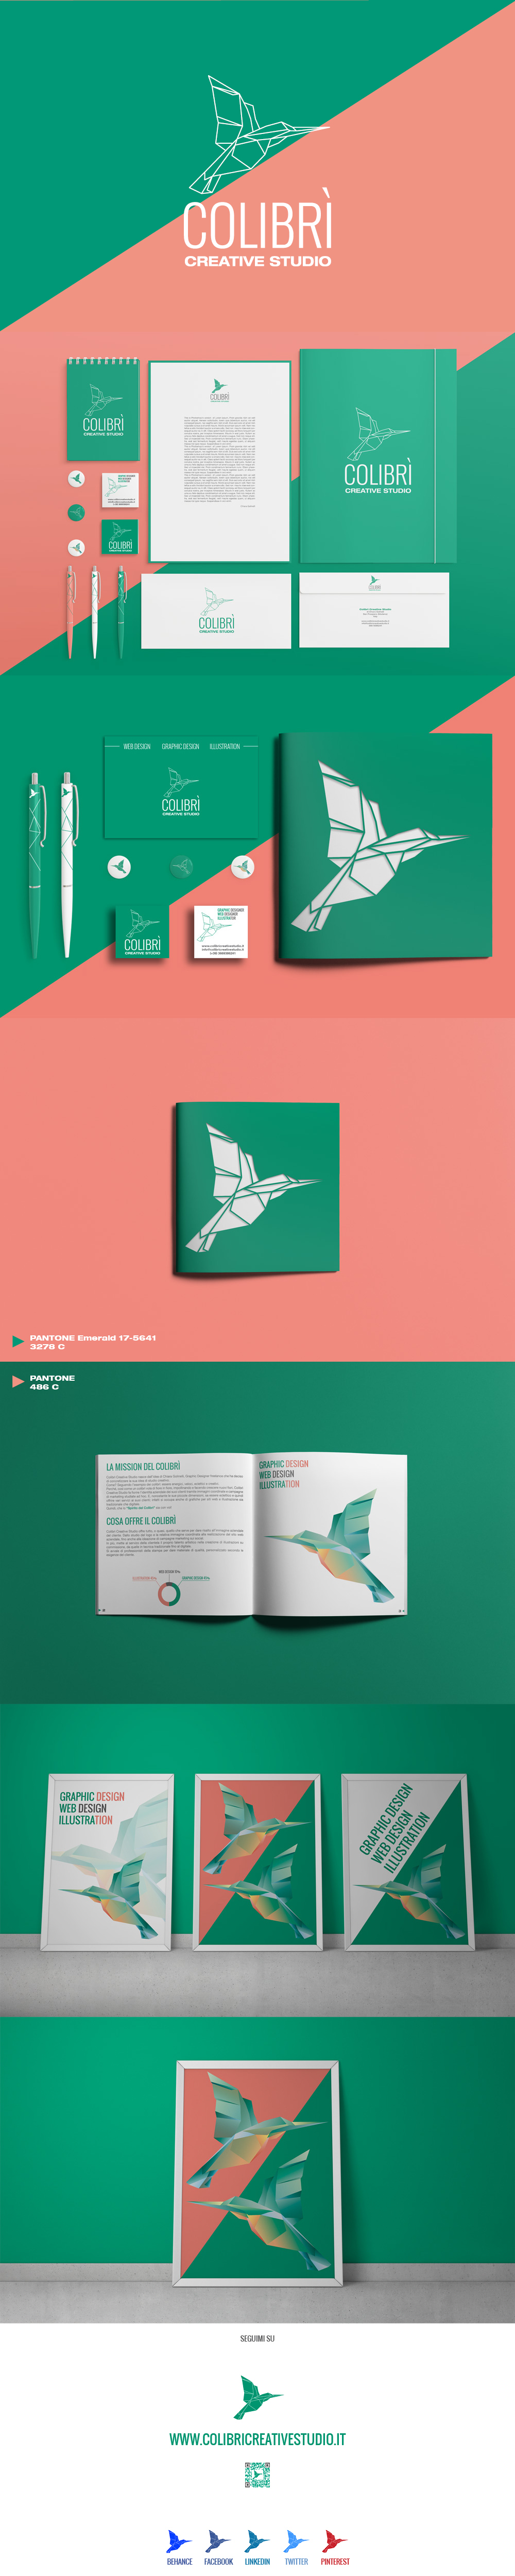 colibri brand identity brand identity immagine coordinata green emerald pantone pink salmon hummingbird design corporate